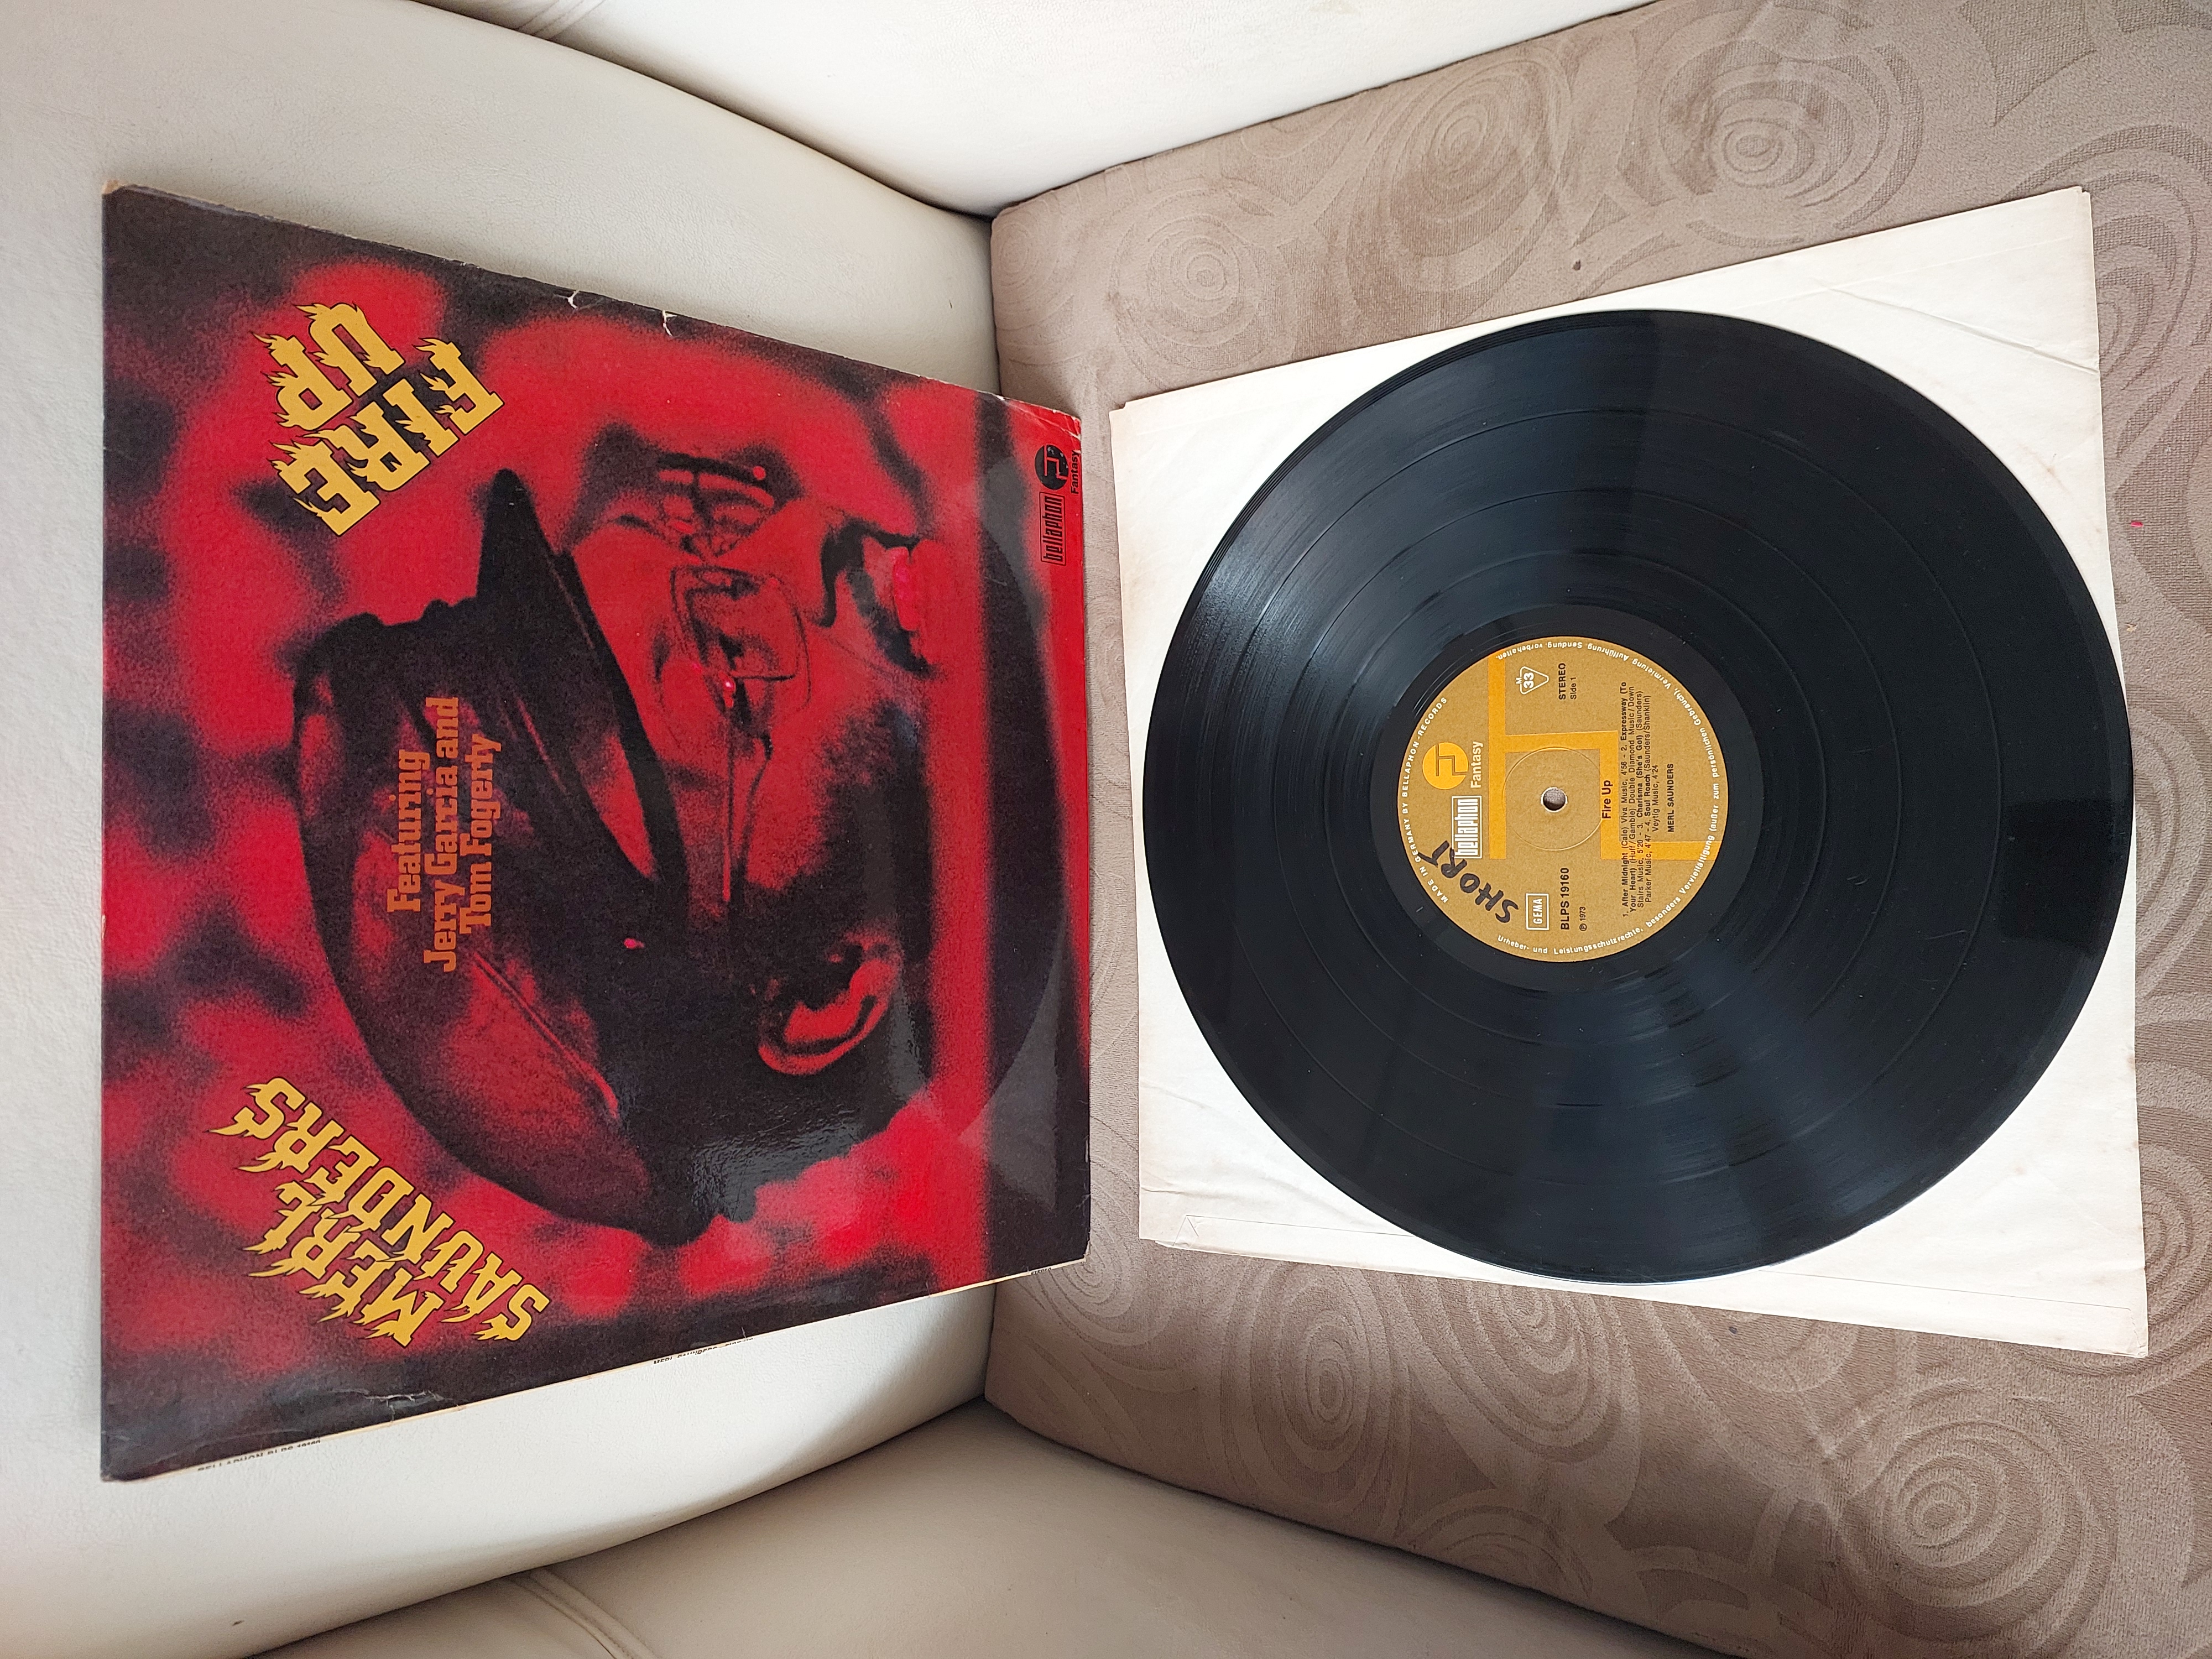 Merl Saunders Featuring Jerry Garcia And Tom Fogerty ‎– Fire Up -1973 Almanya Basım Albüm - LP Plak